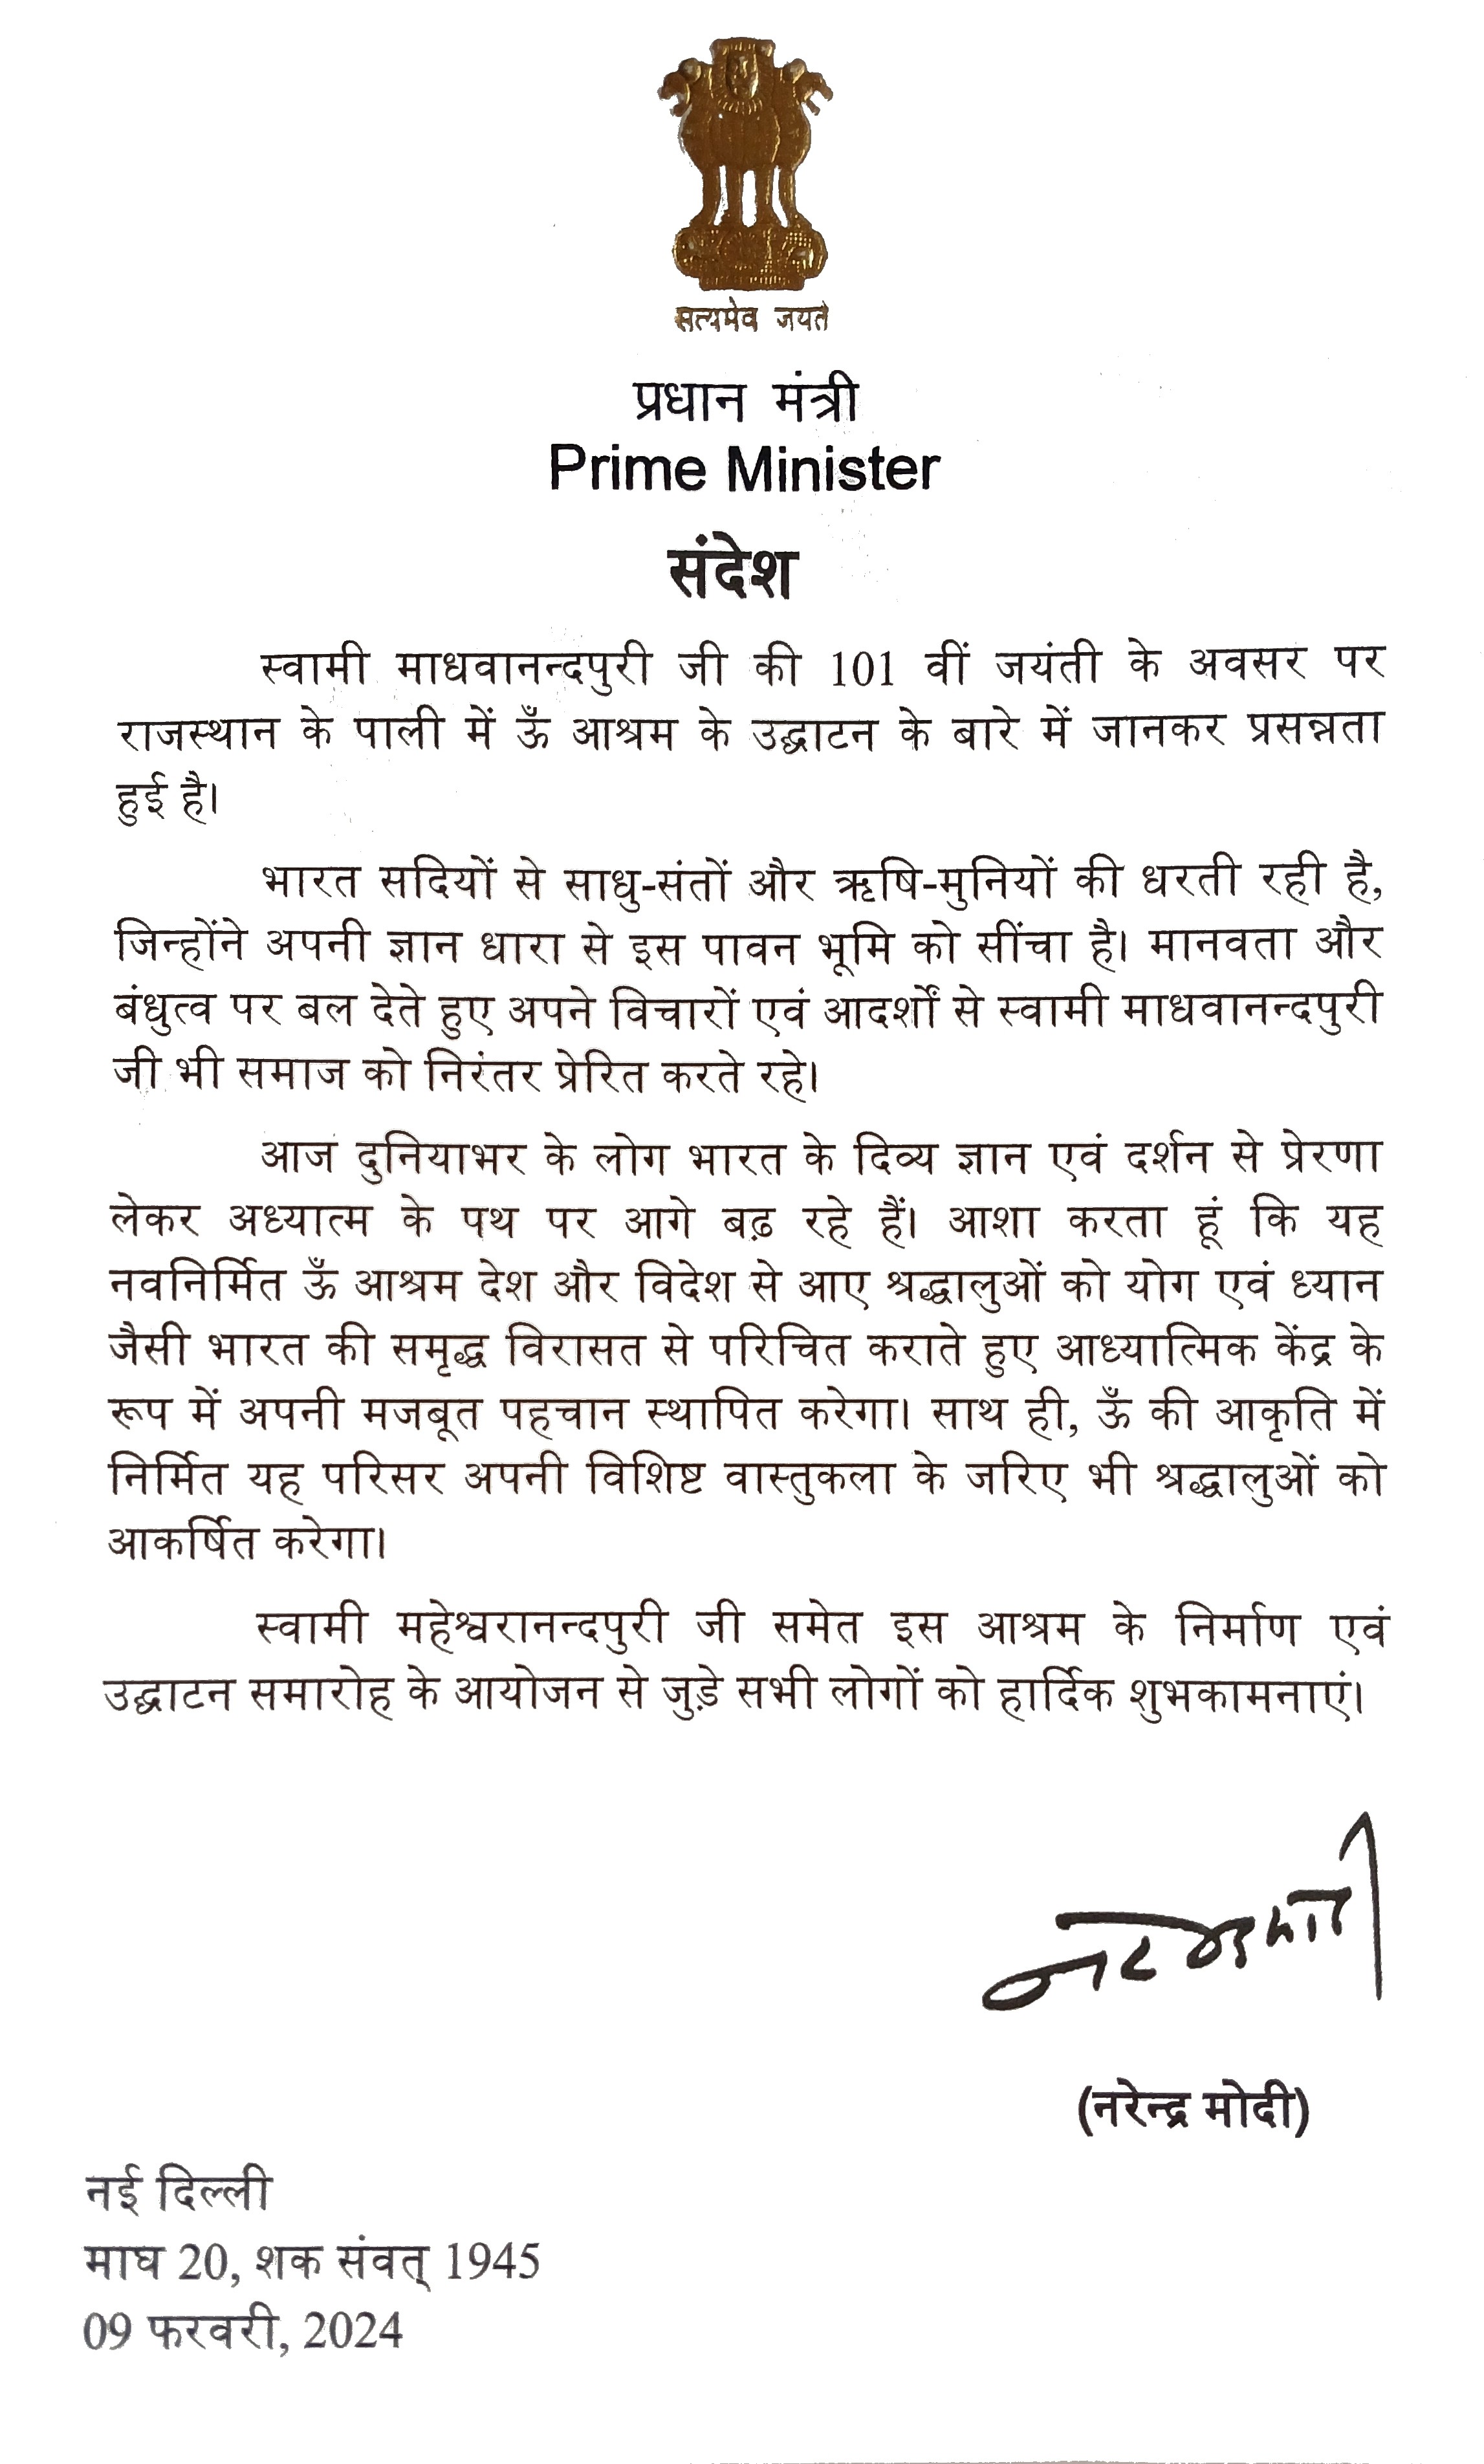 PM Narendra Modiji's message for the Grand Opening of OM Ashram